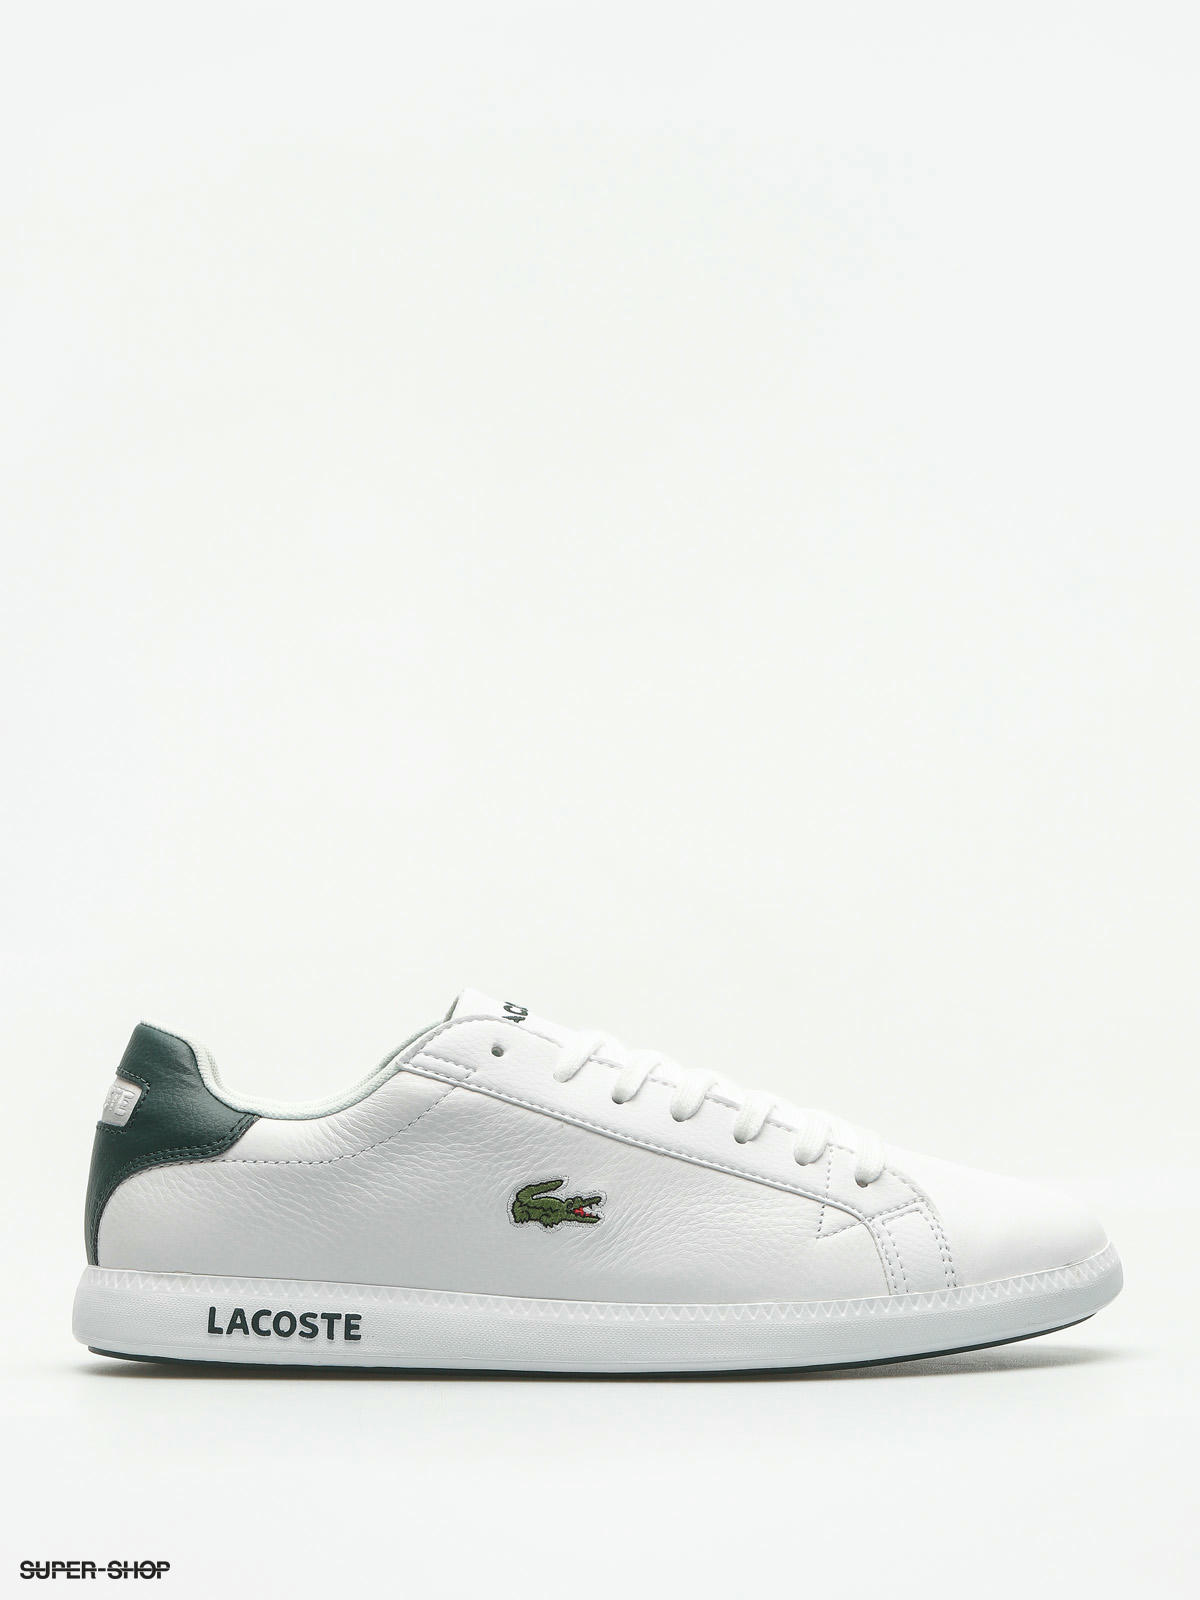 Lacoste Graduate Lcr3 118 (white/dark green)